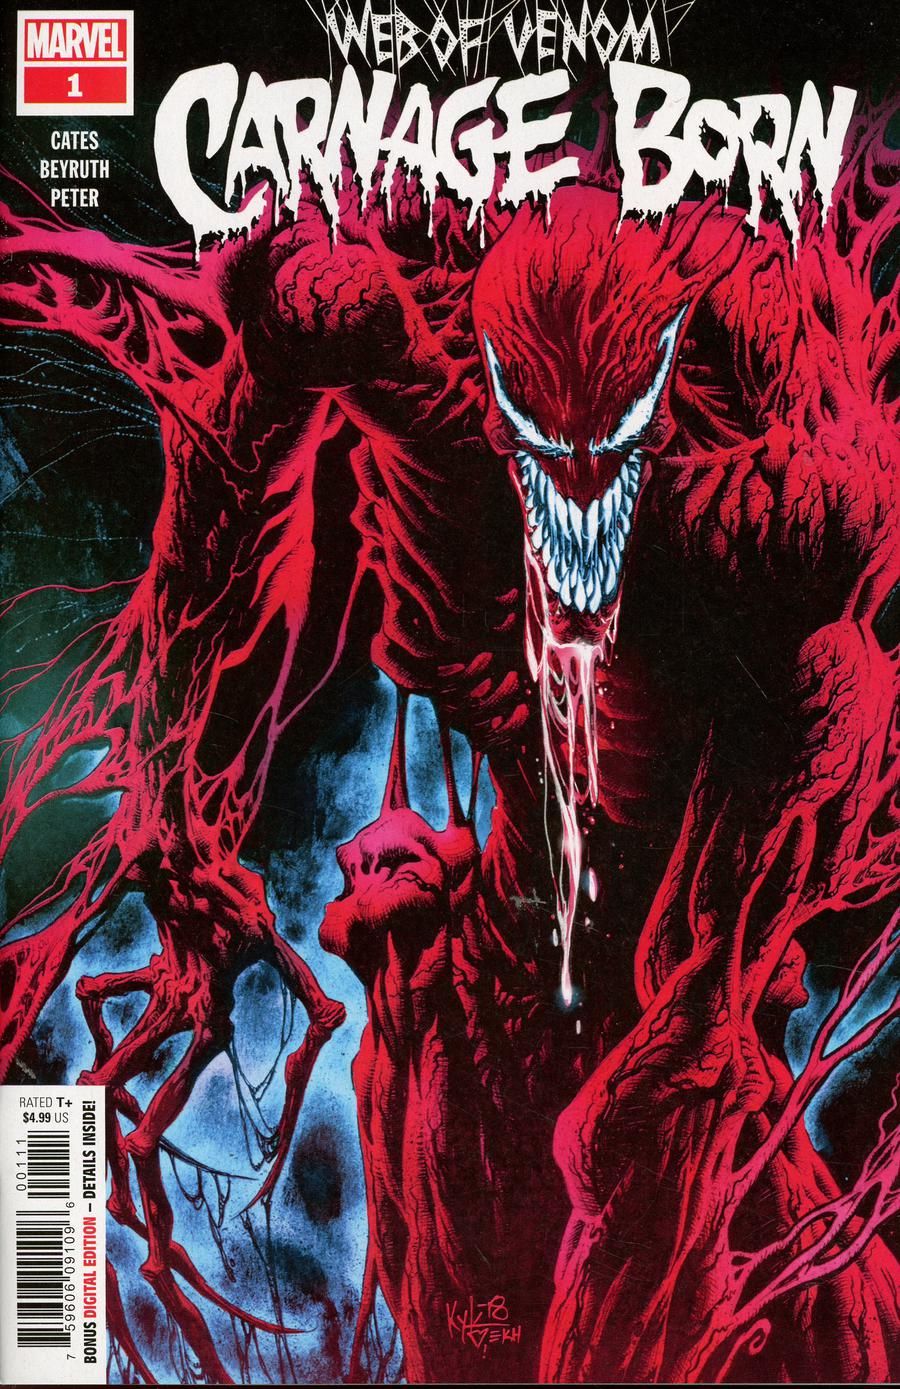 Web of Venom: Carnage Born no. 1 (2018 Series)